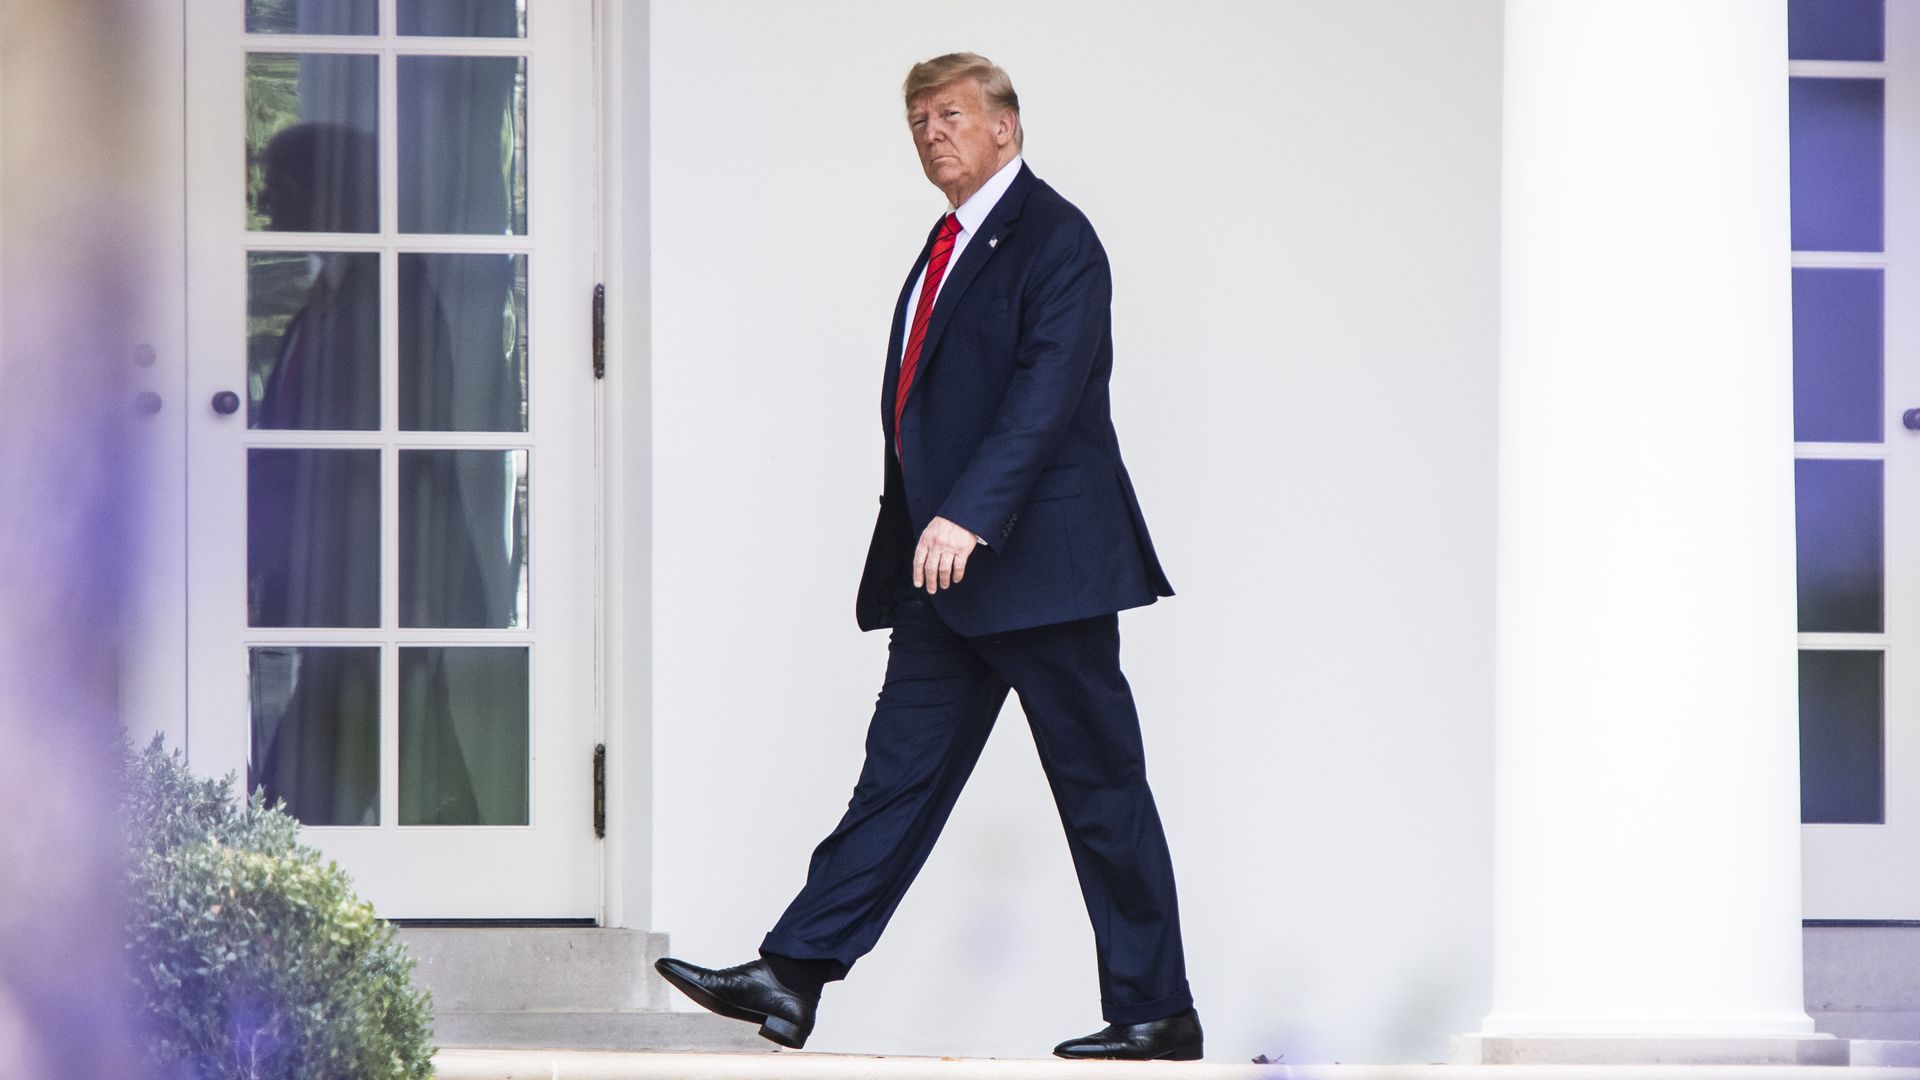 Trump walking.